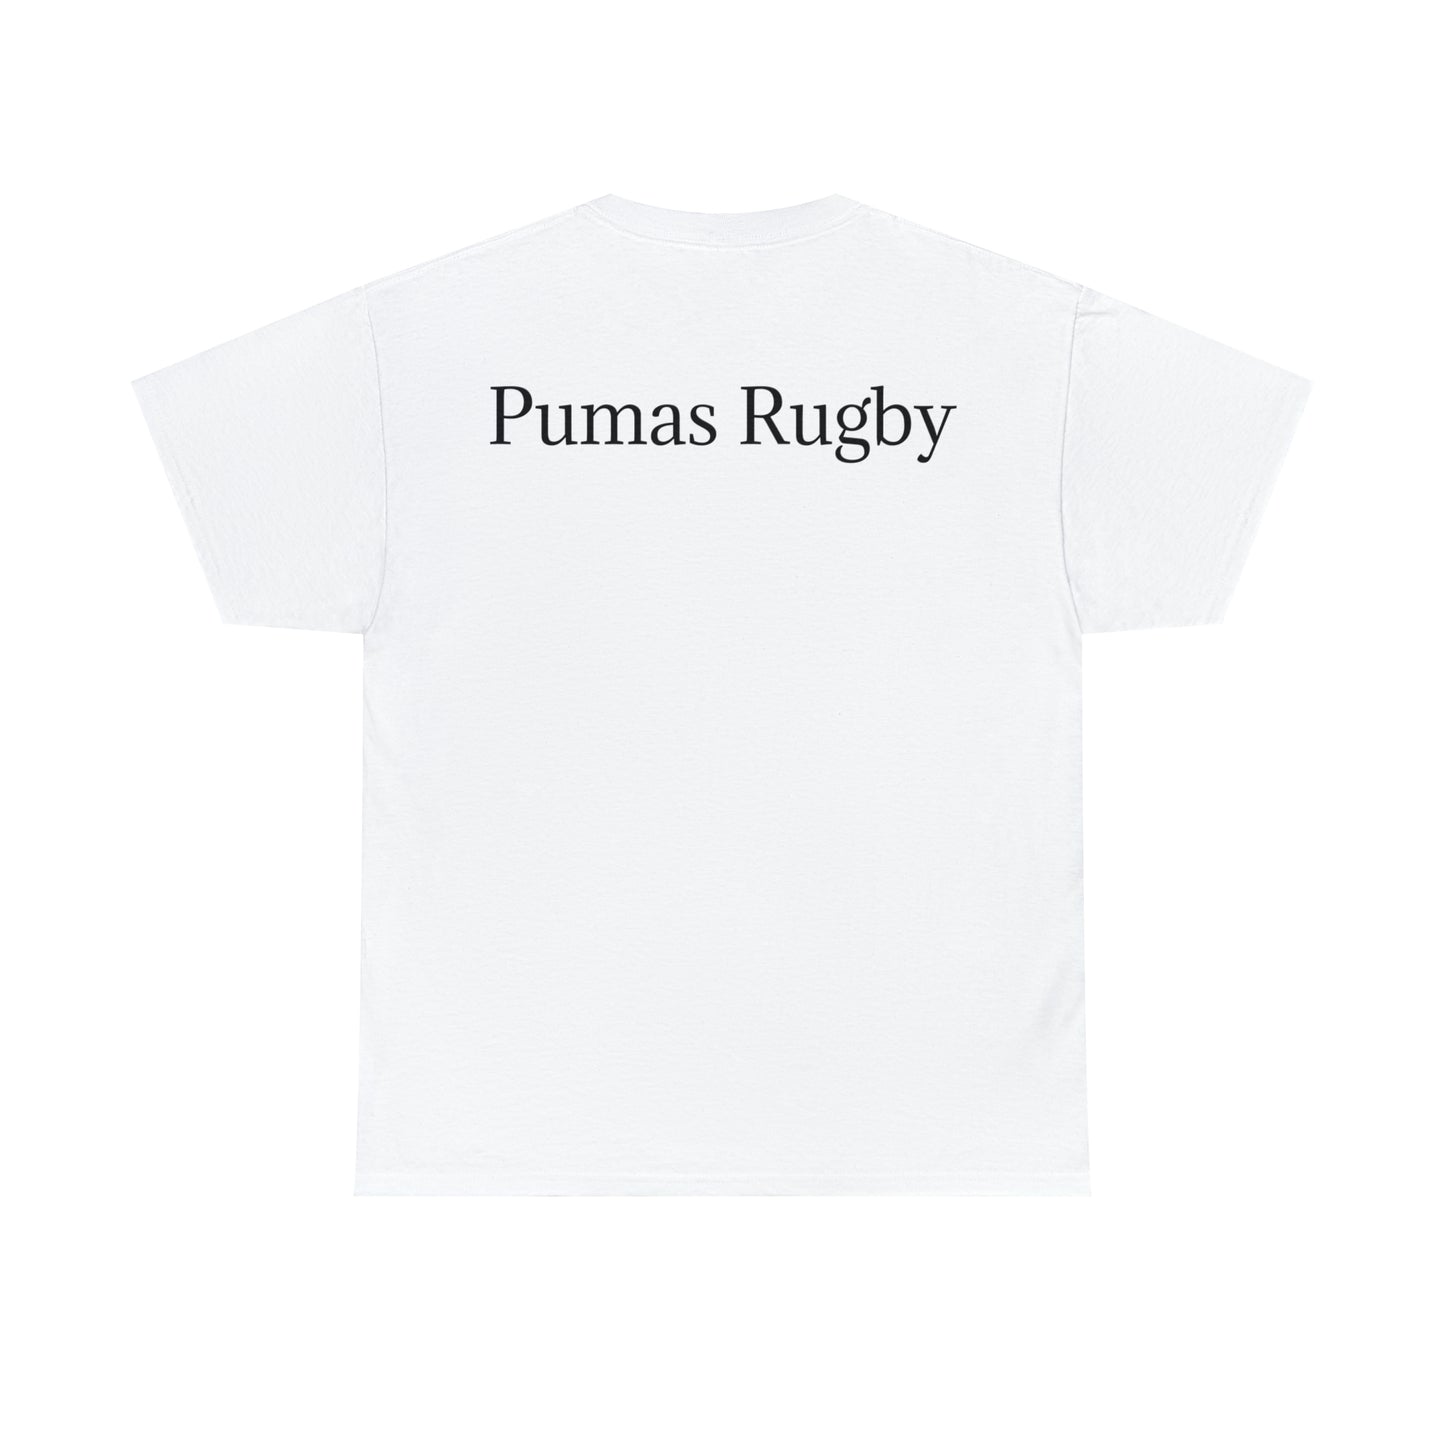 Ready Pumas - light shirts